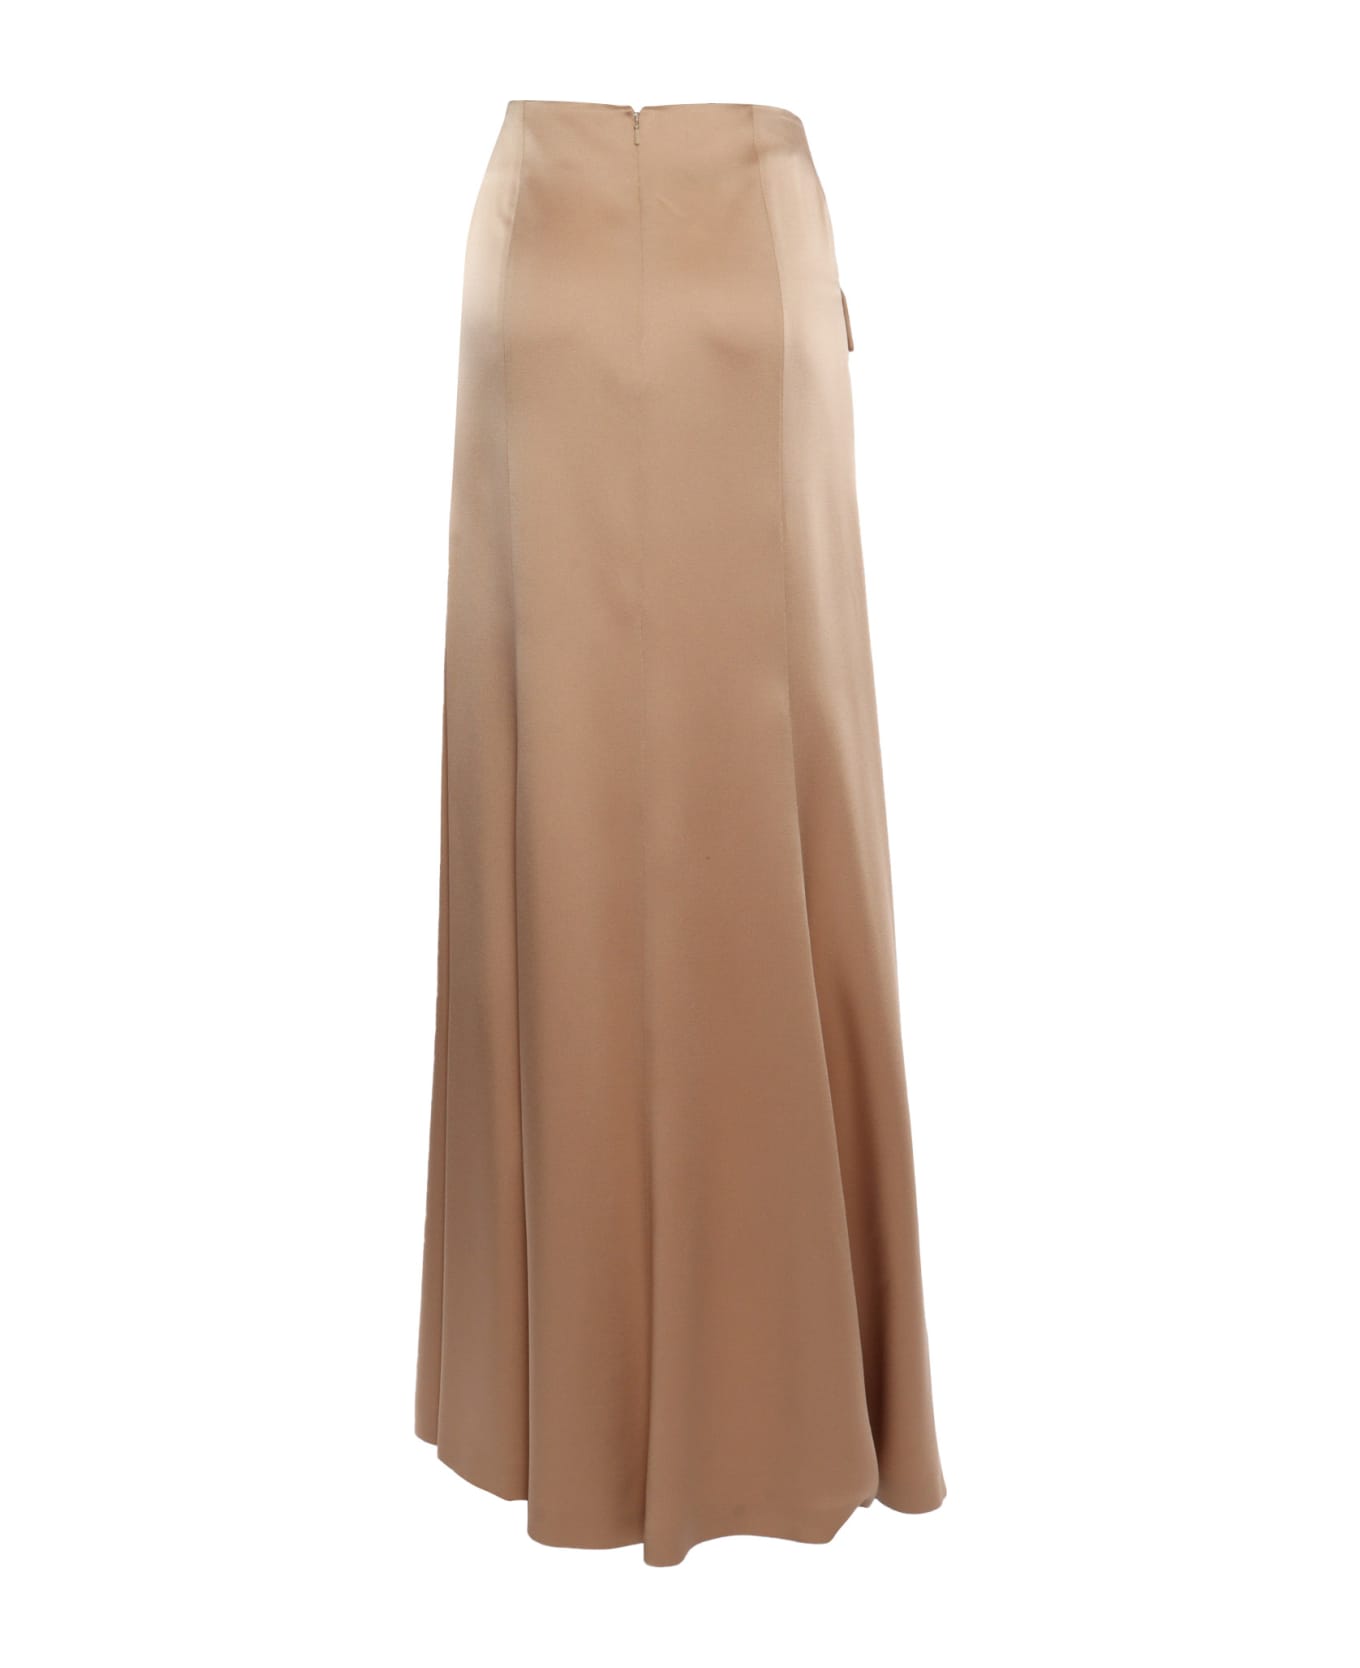 Alberta Ferretti Camel Colored Long Skirt - BEIGE